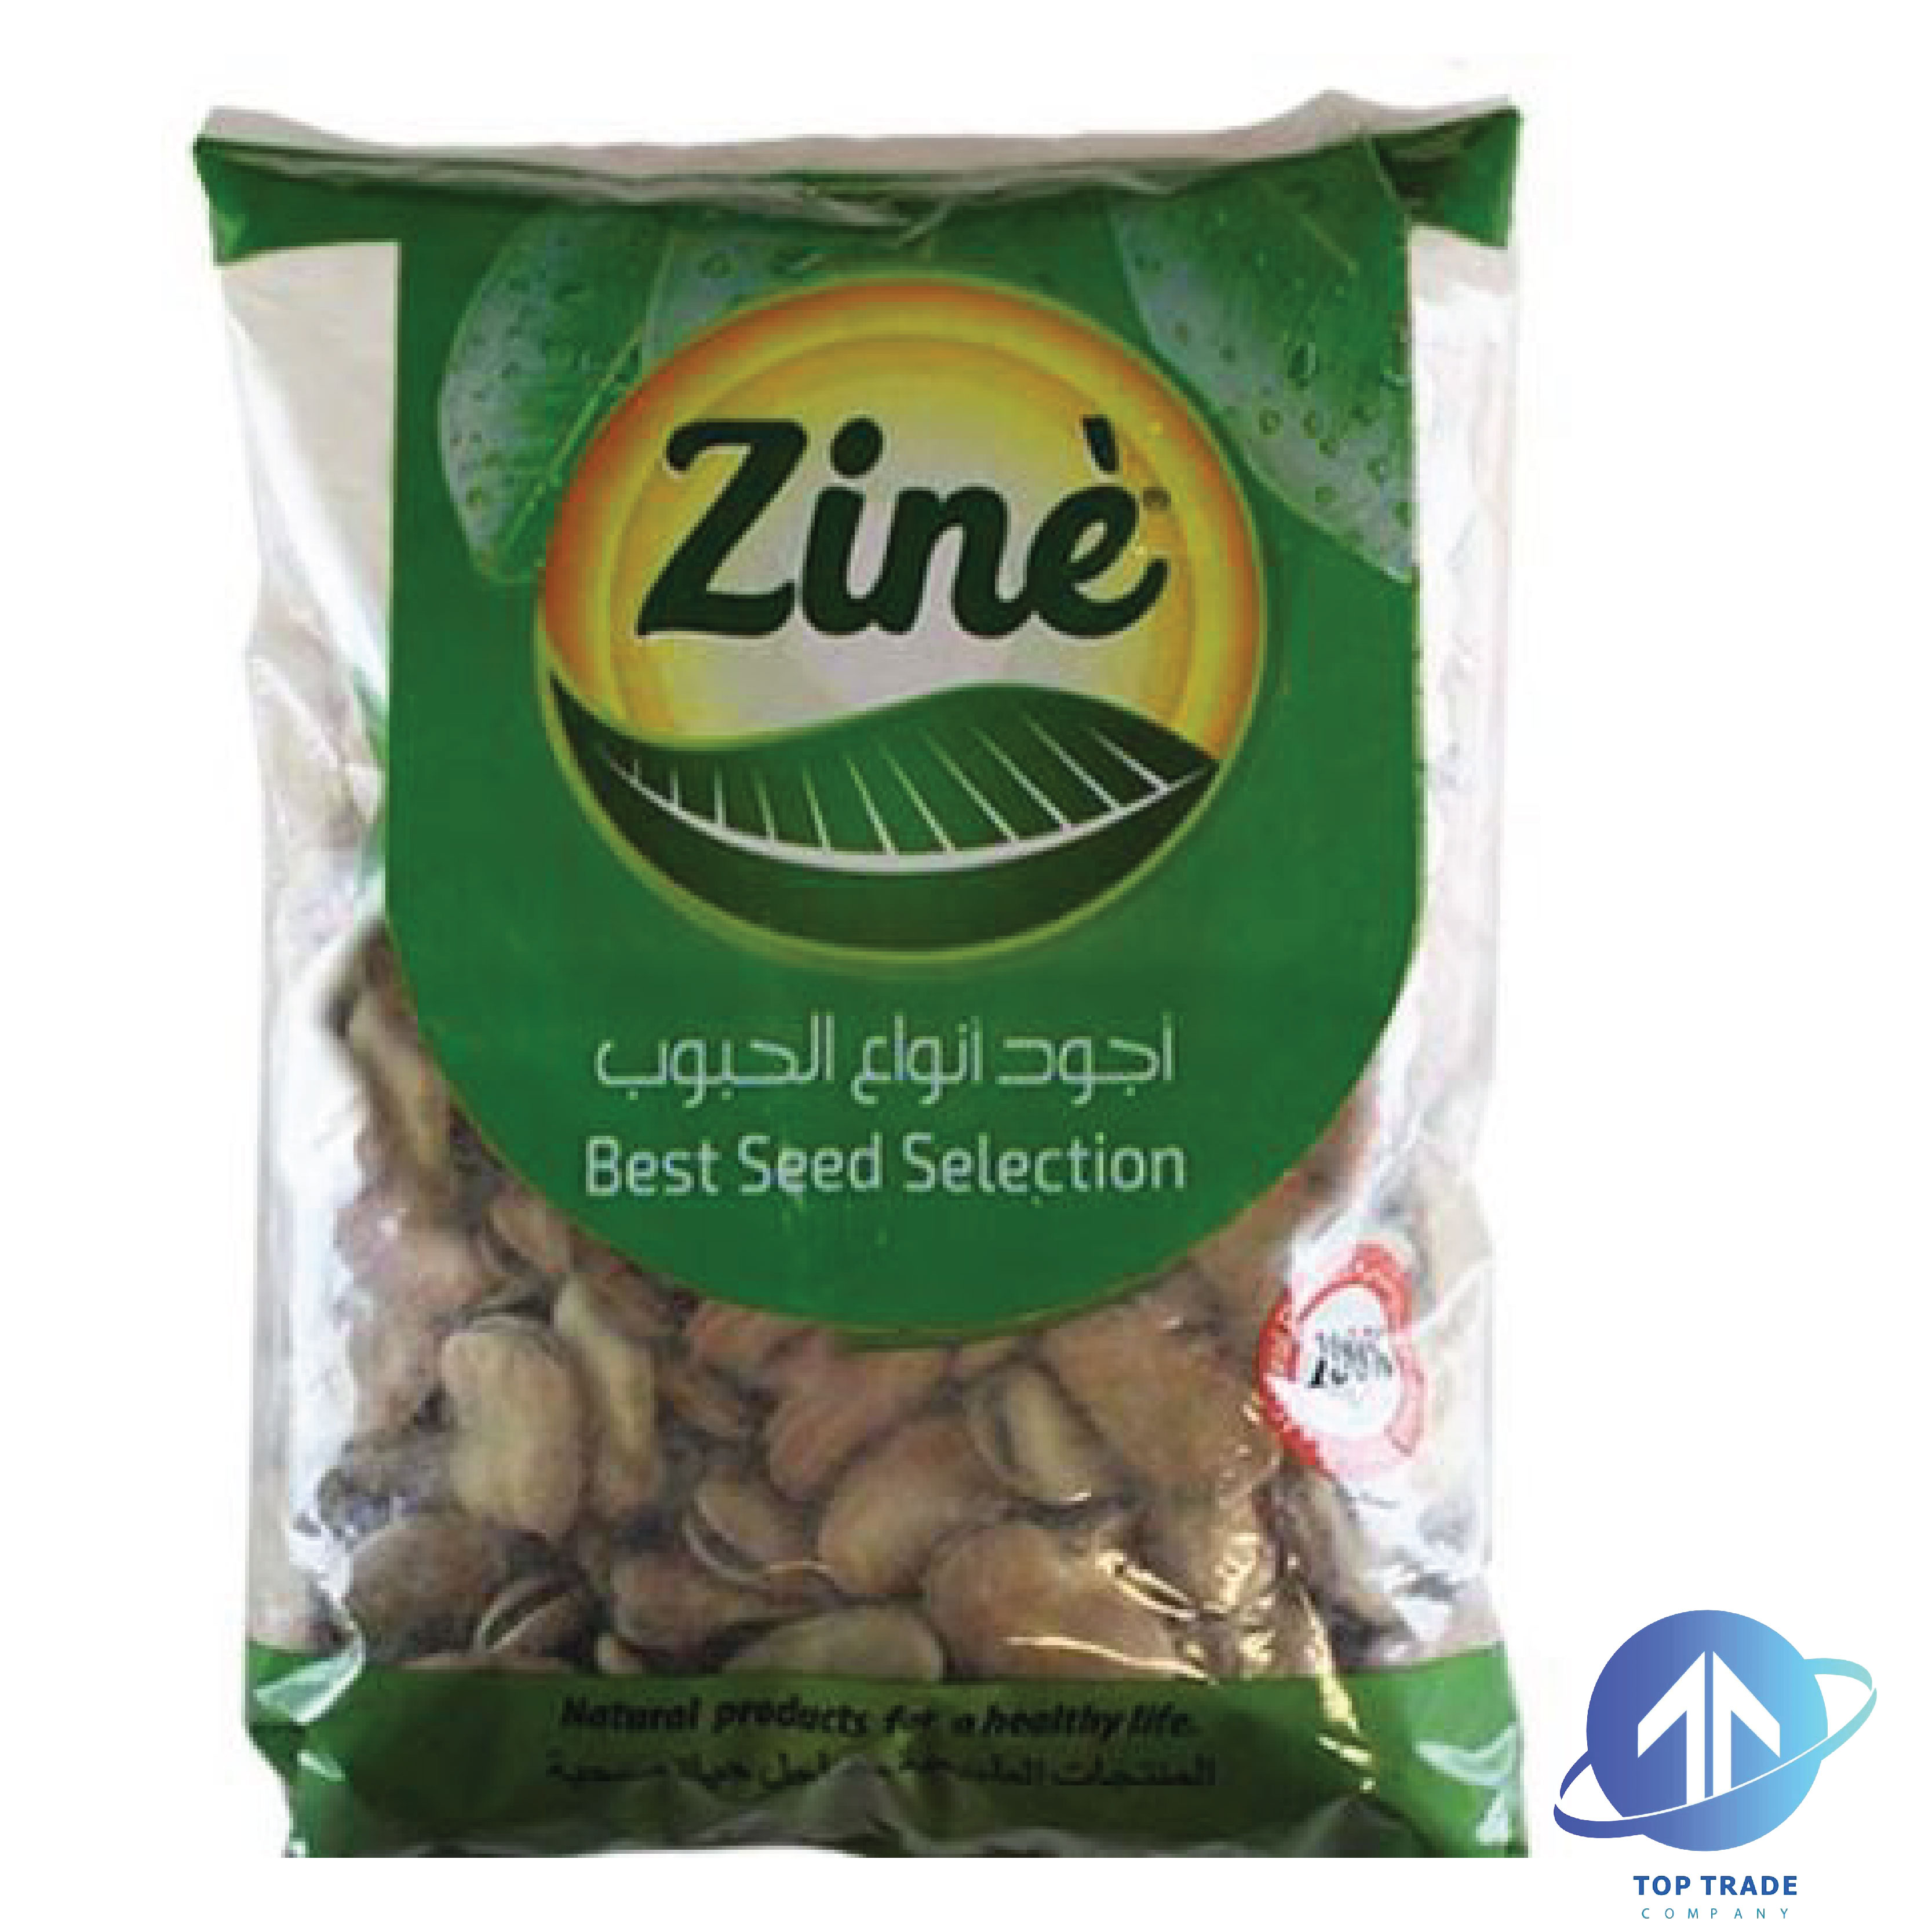 Zine Broad beans 800gr